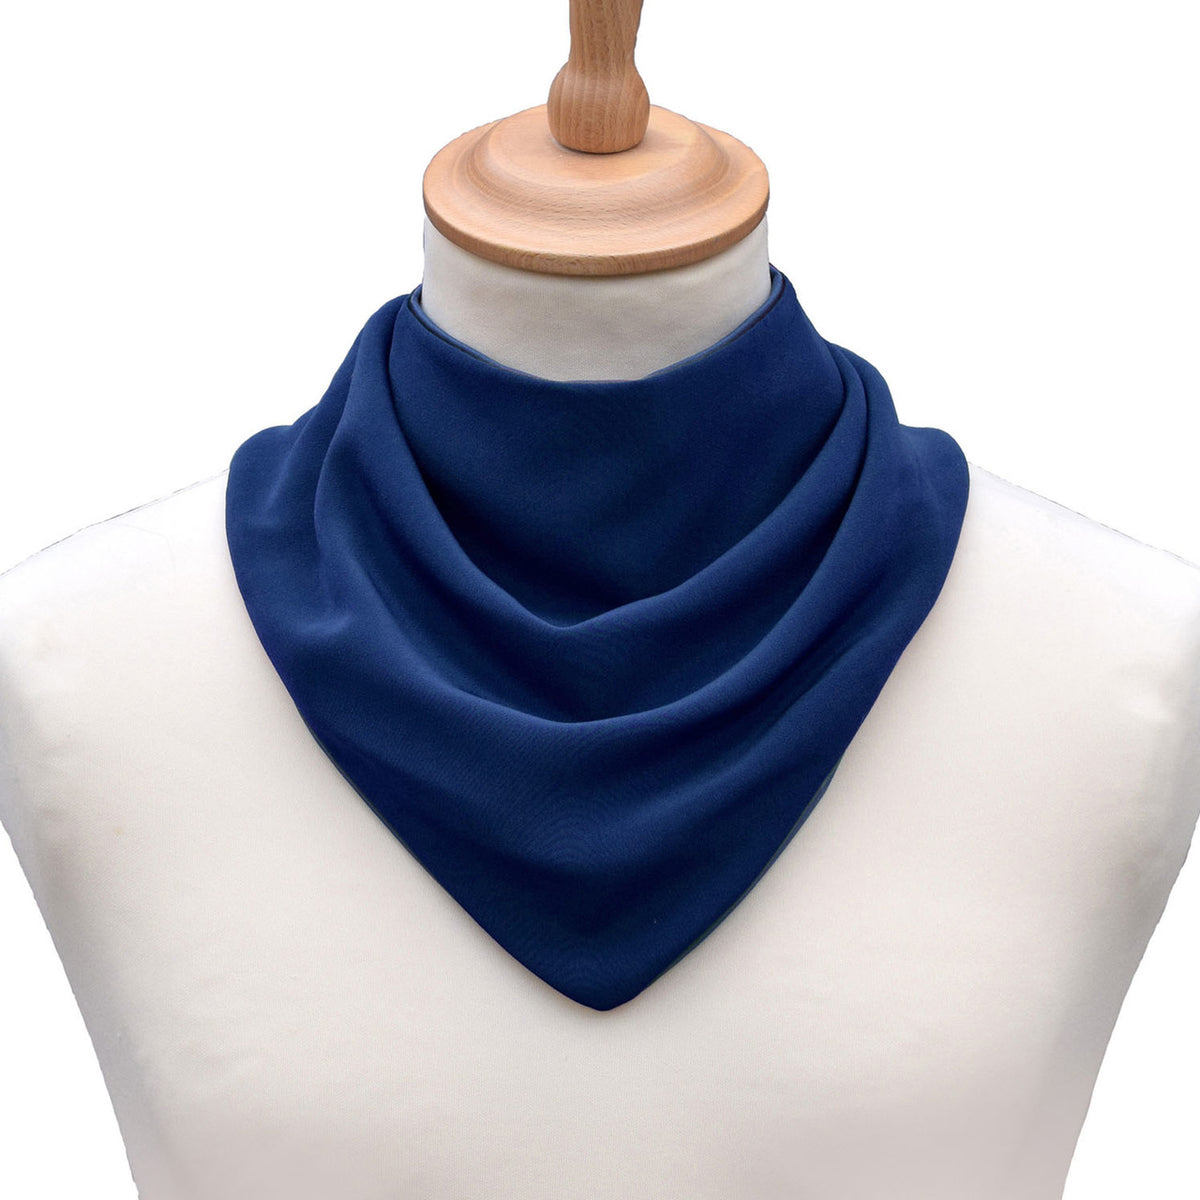 Neckerchief style dribble bib - Navy | Health Care | Care Designs